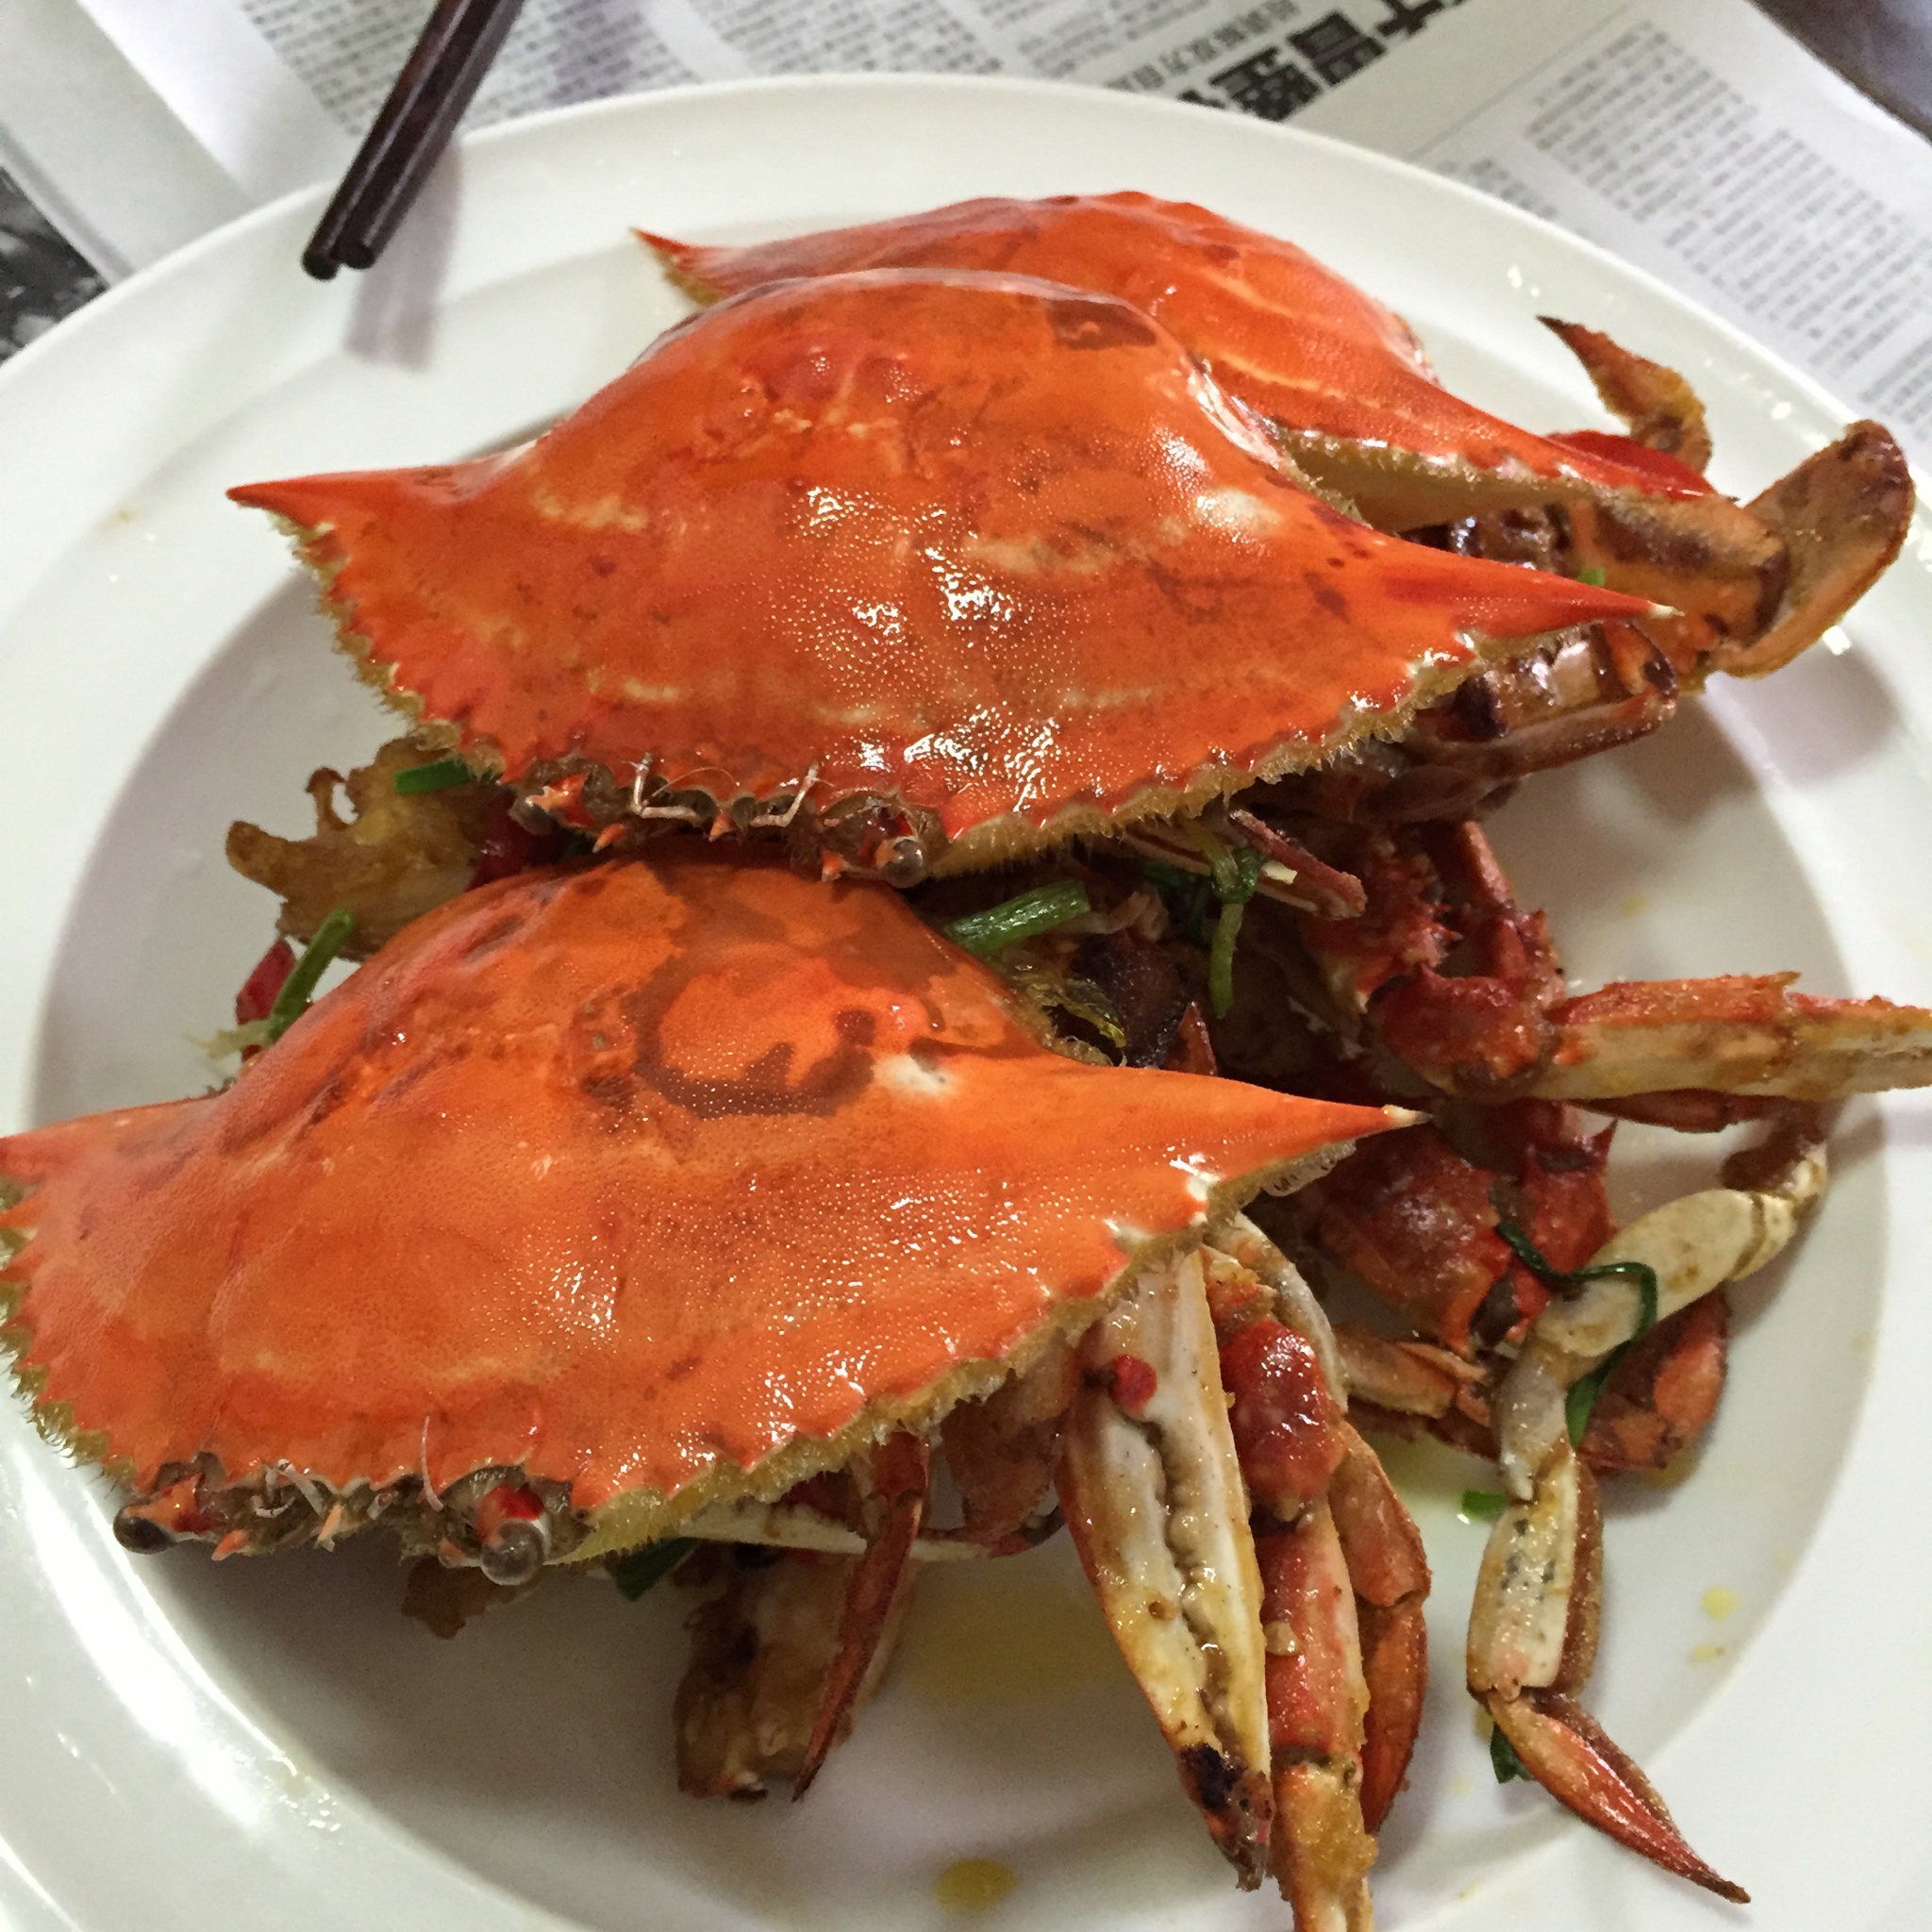 葱姜炒蟹 Fried Crabs